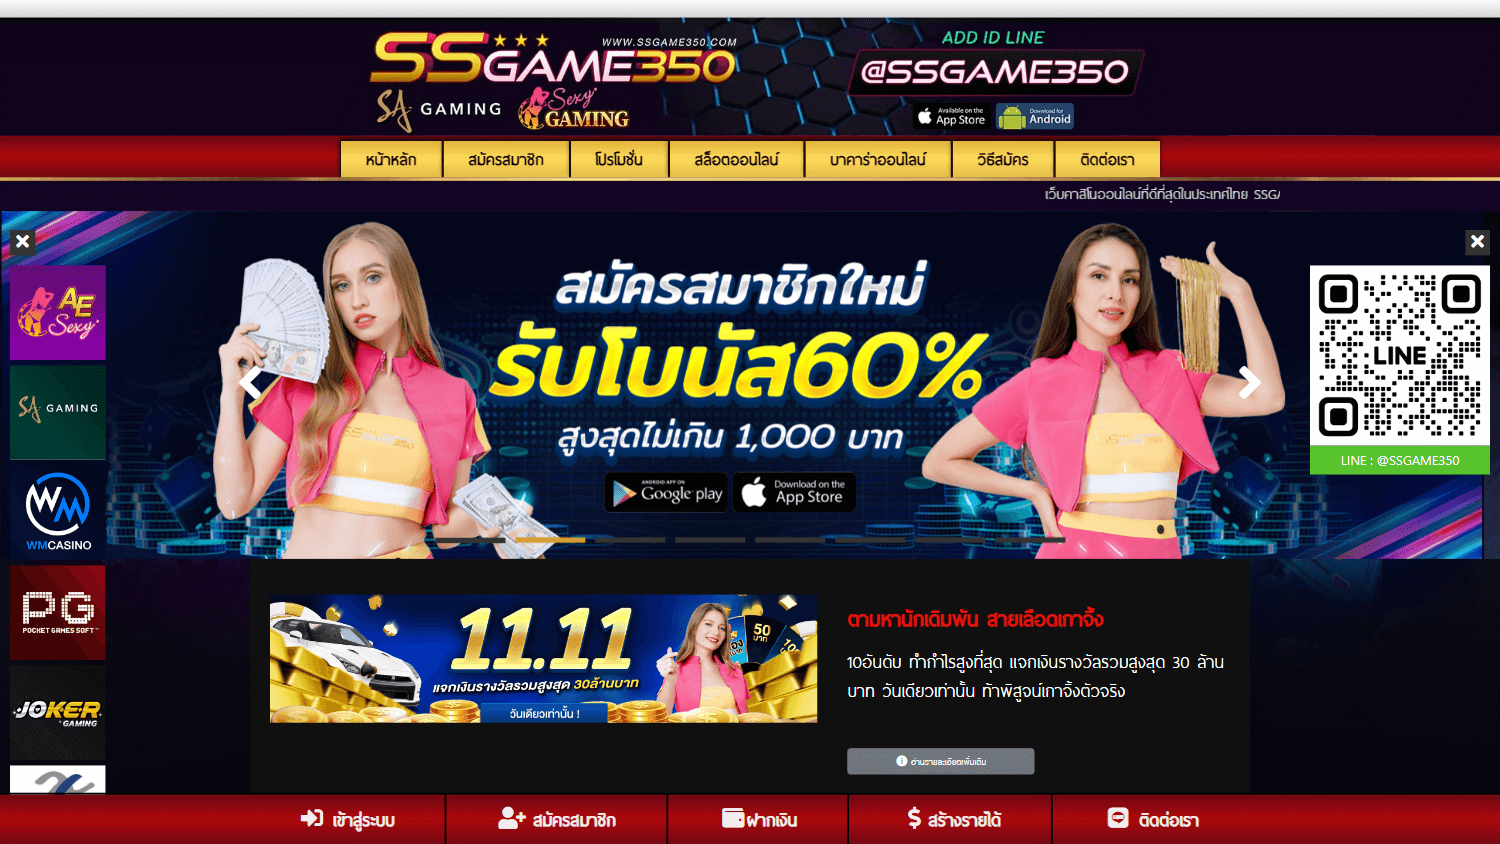 ssgame350_casino_promotions_desktop